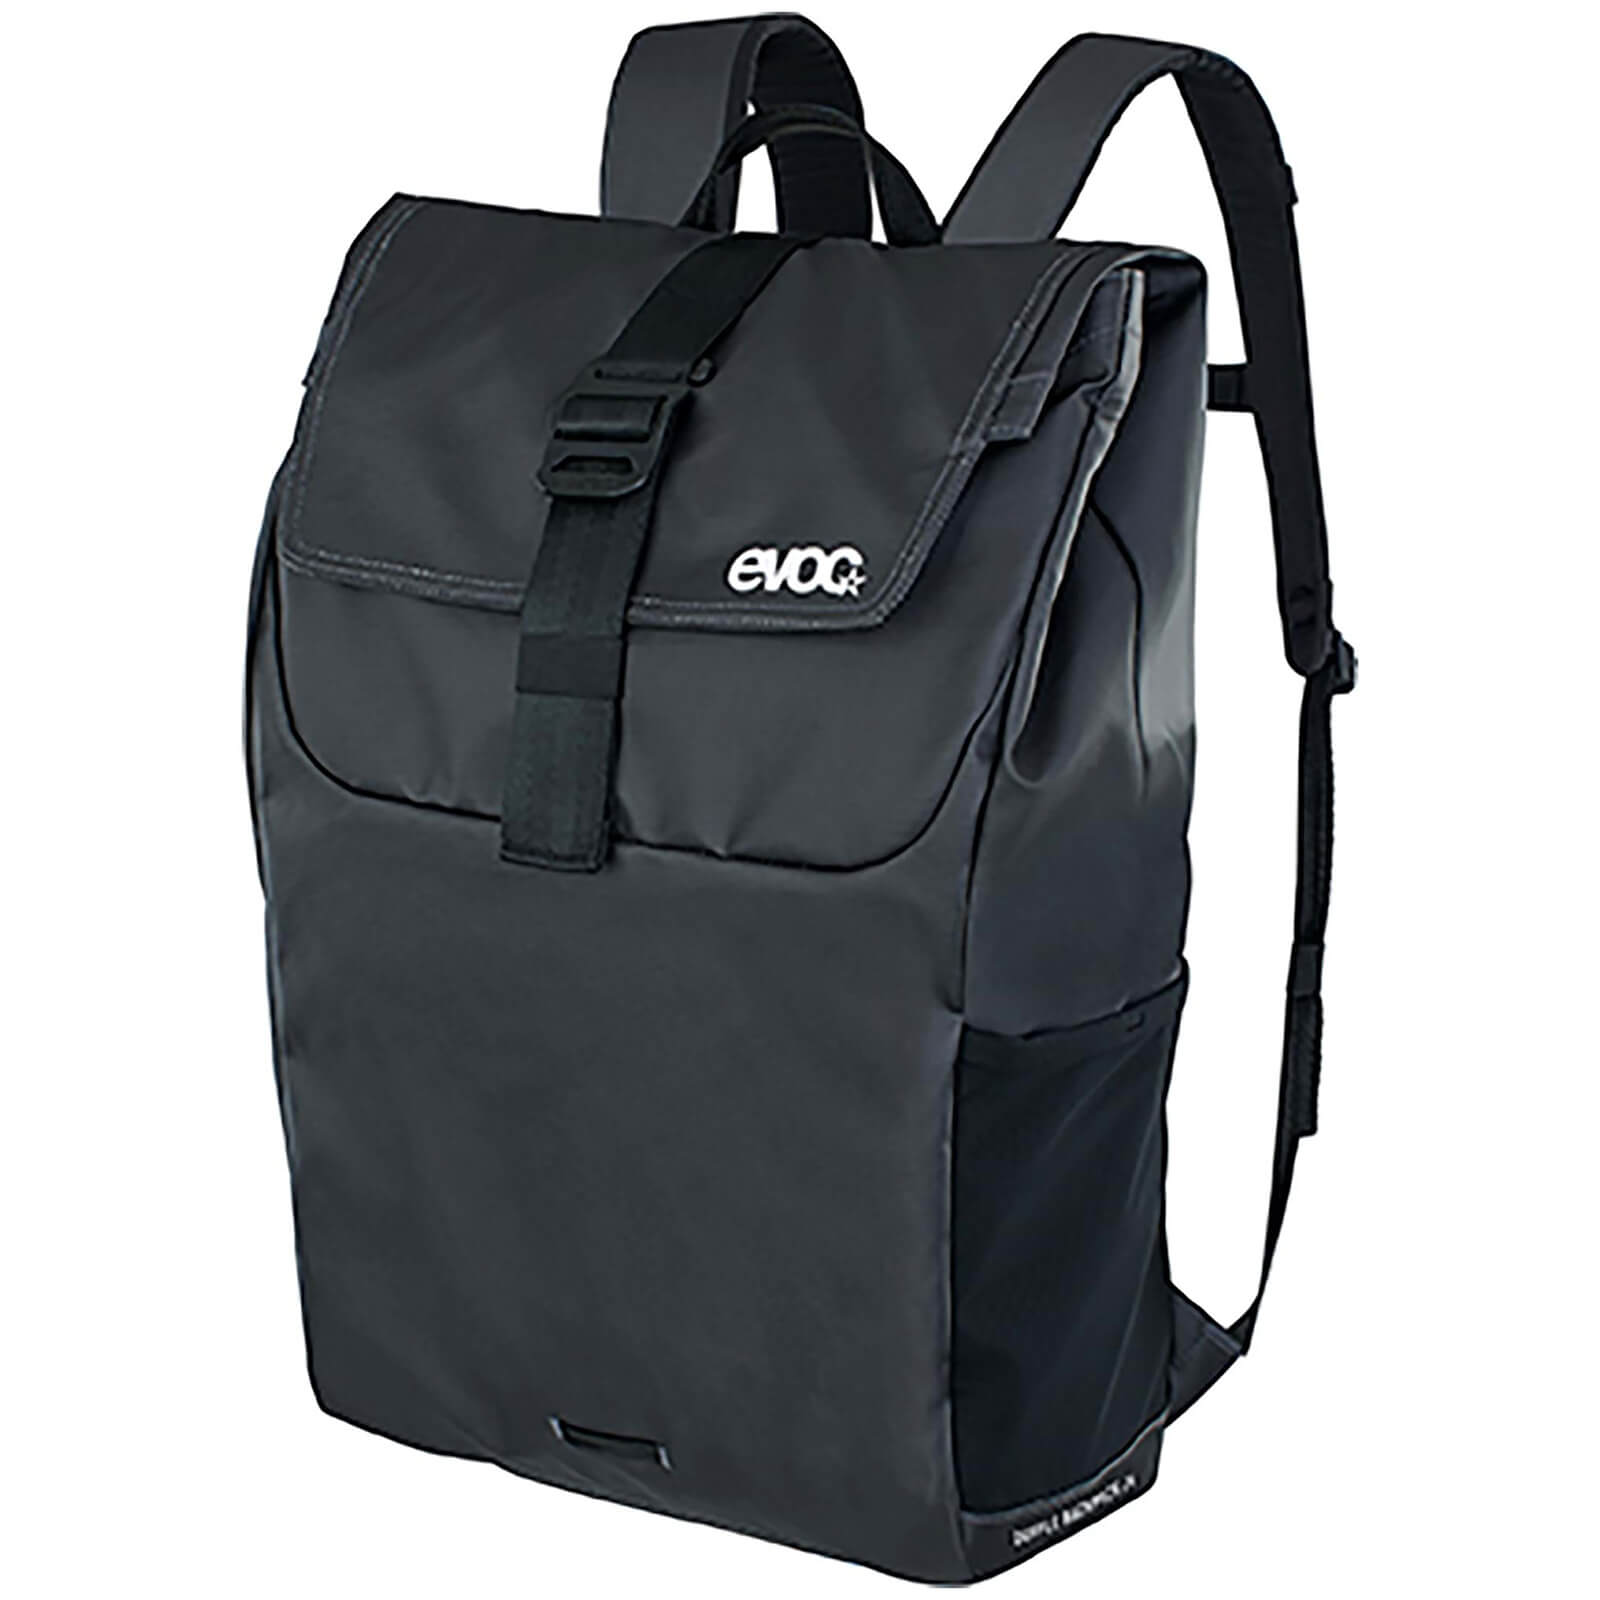 Evoc 26L Duffle Backpack - Carbon Grey/Black